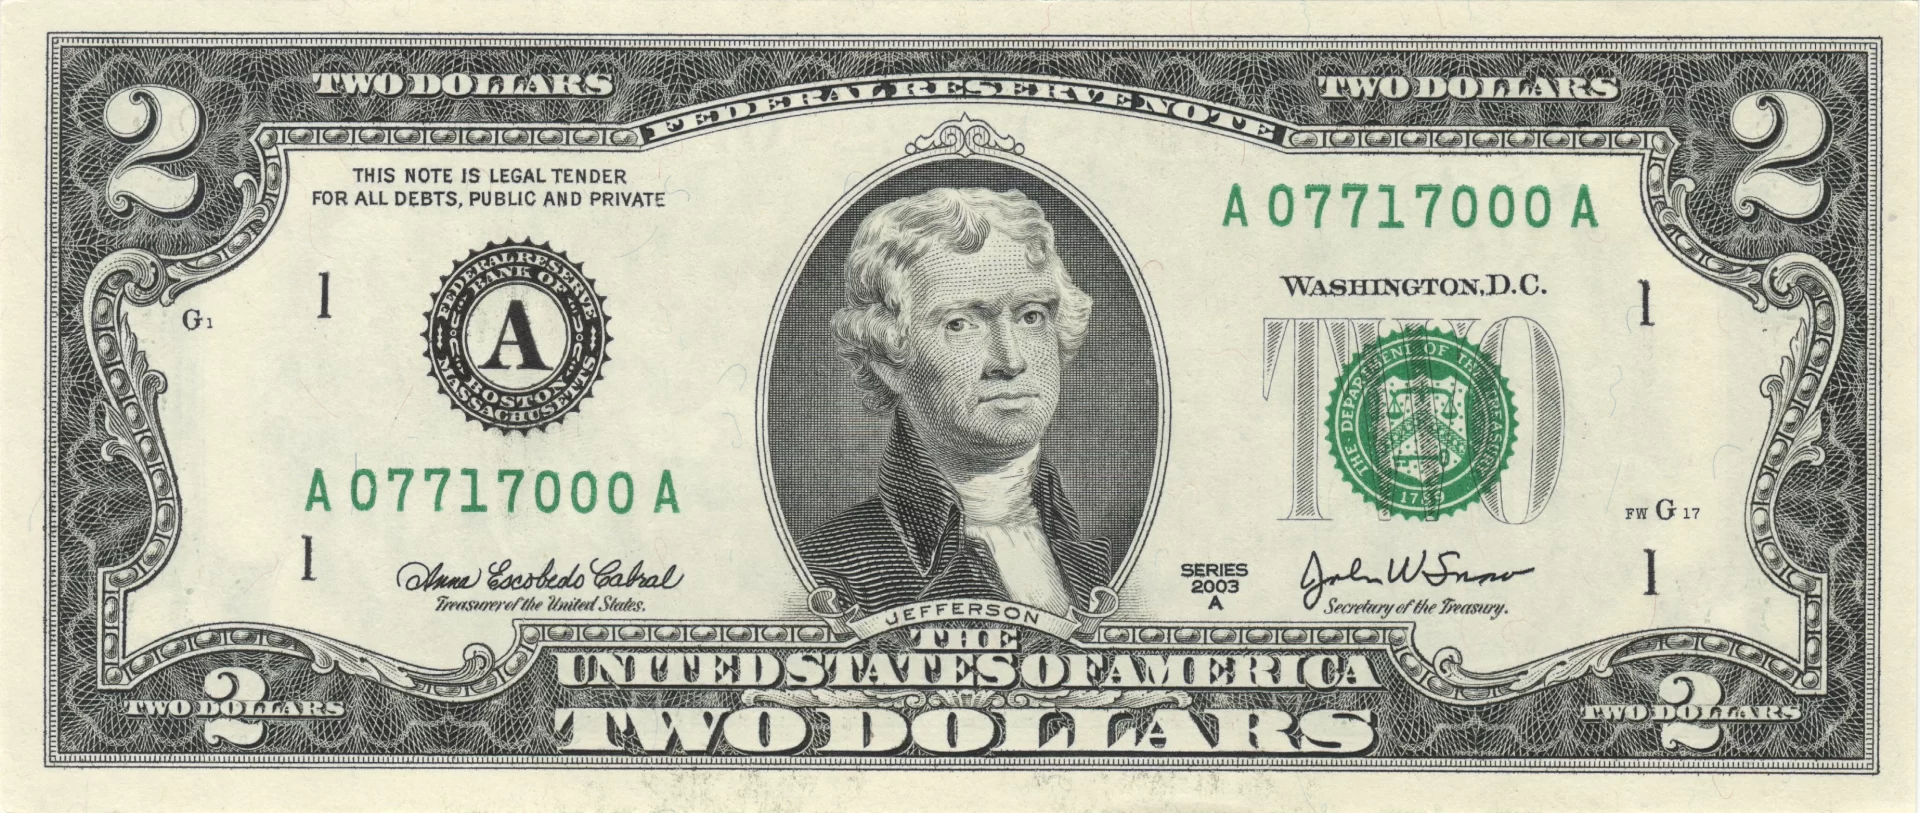 US $2 bill obverse